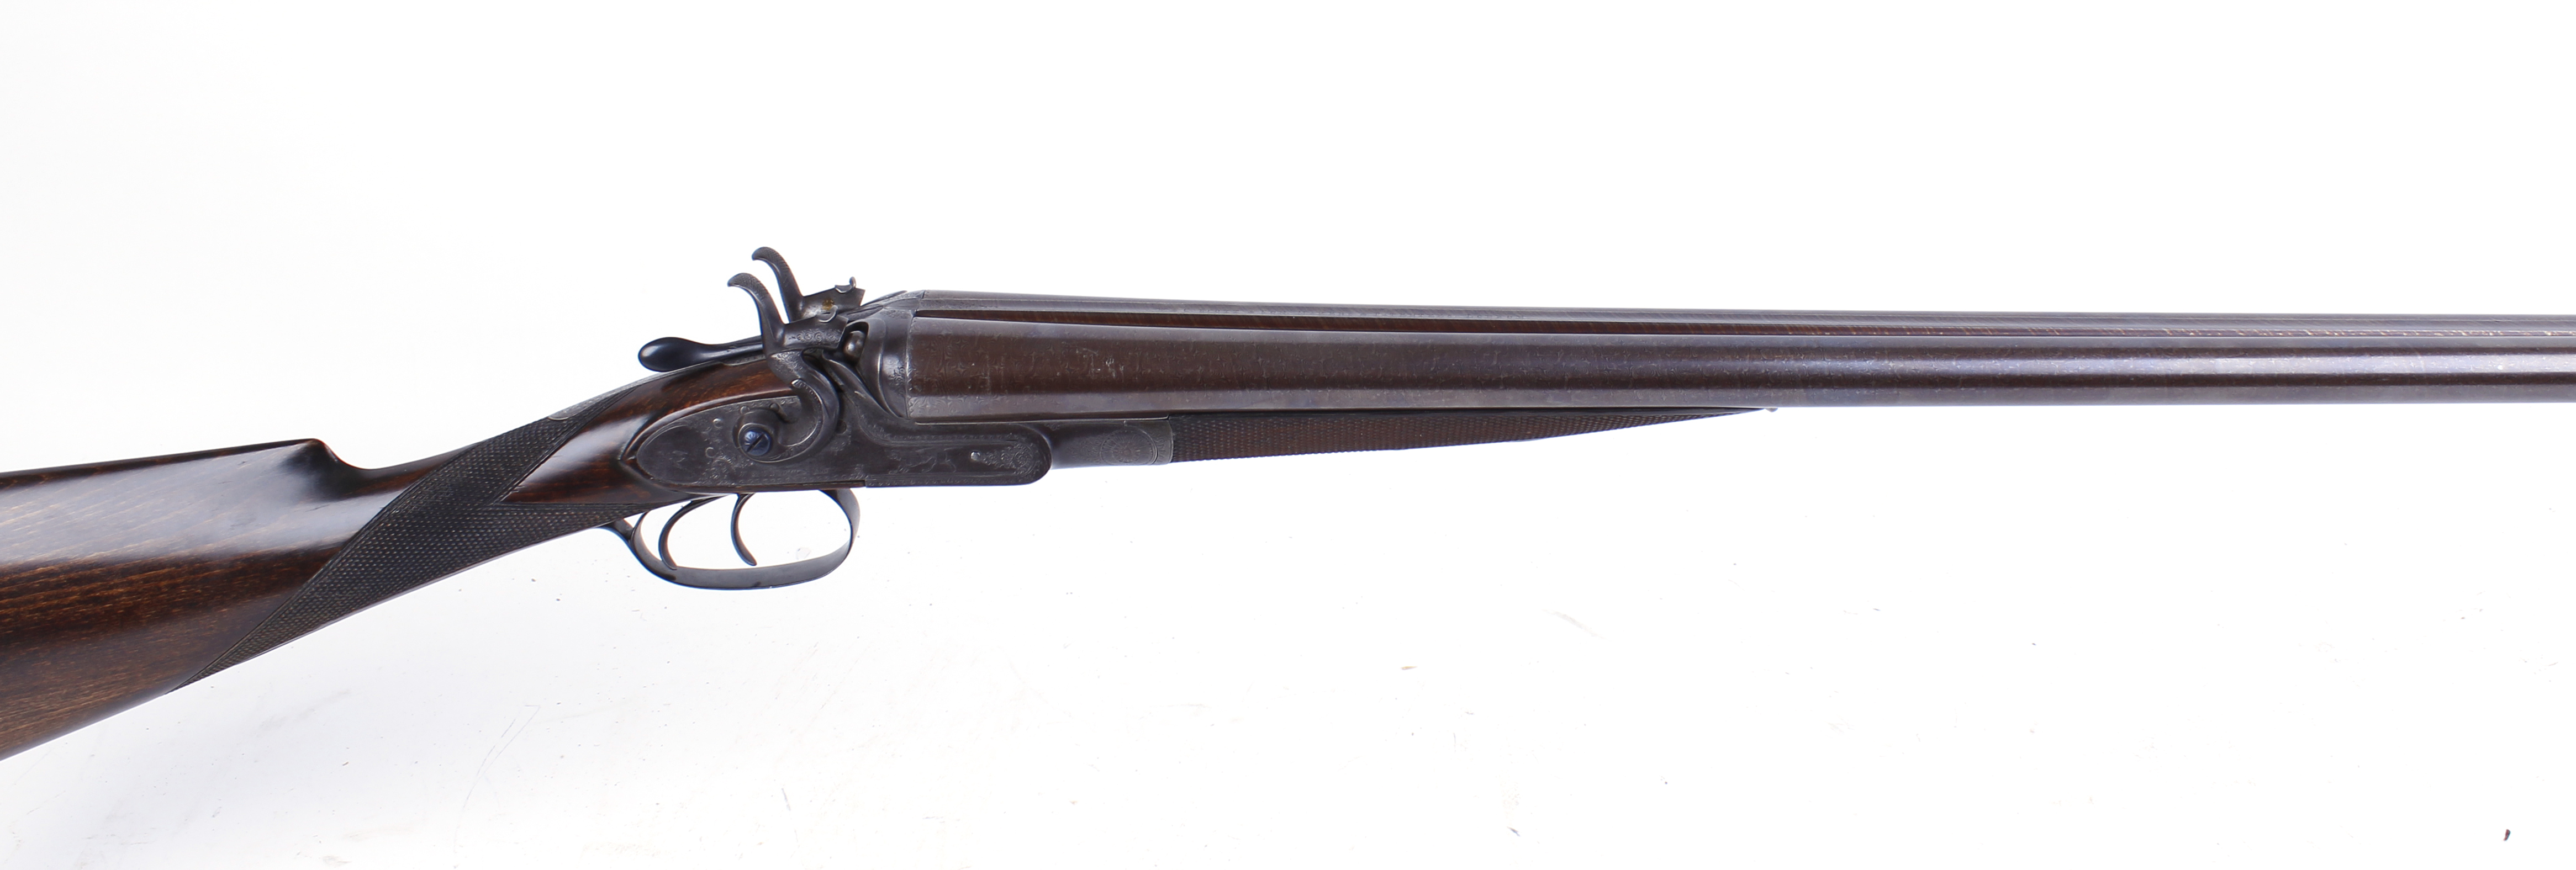 S2 12 bore double hammer gun by W. C. Scott, c.1880, 30 ins brown damascus barrels inscribed W & C